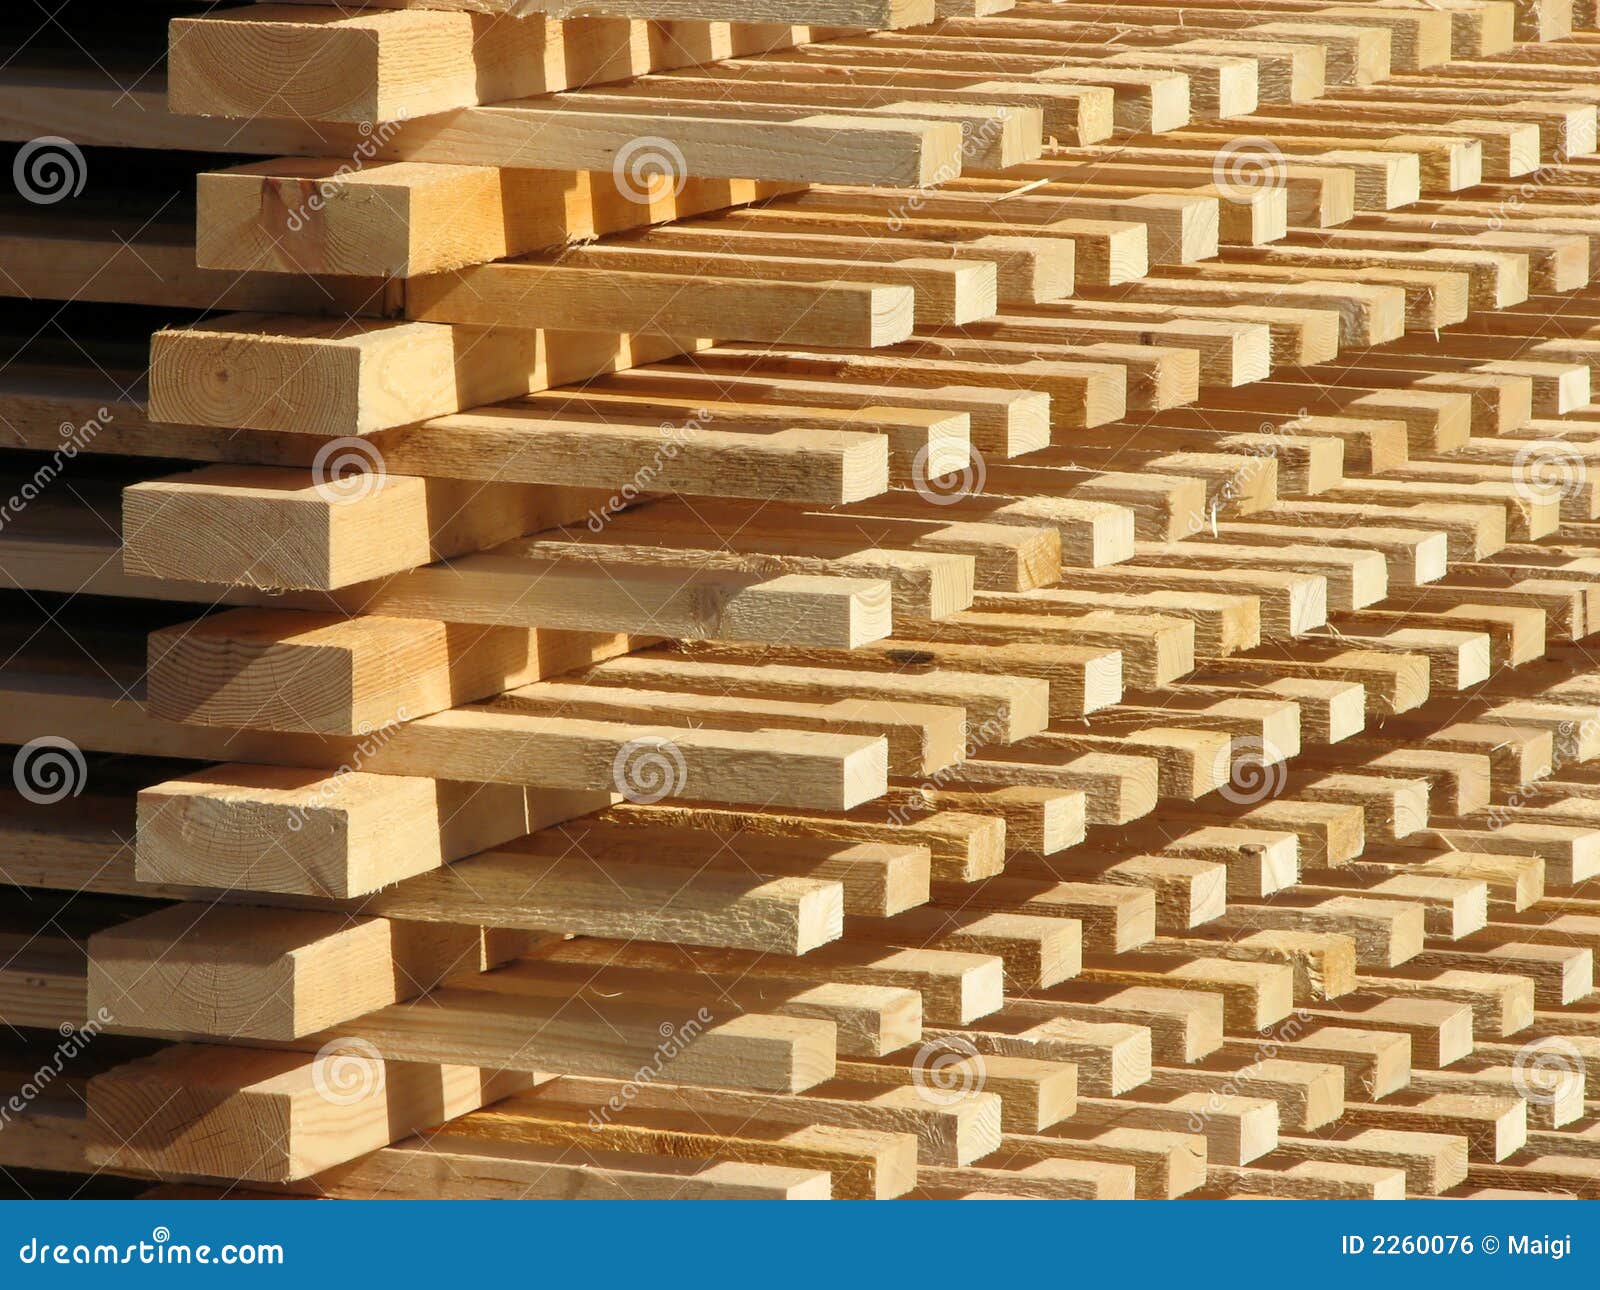 timber supply